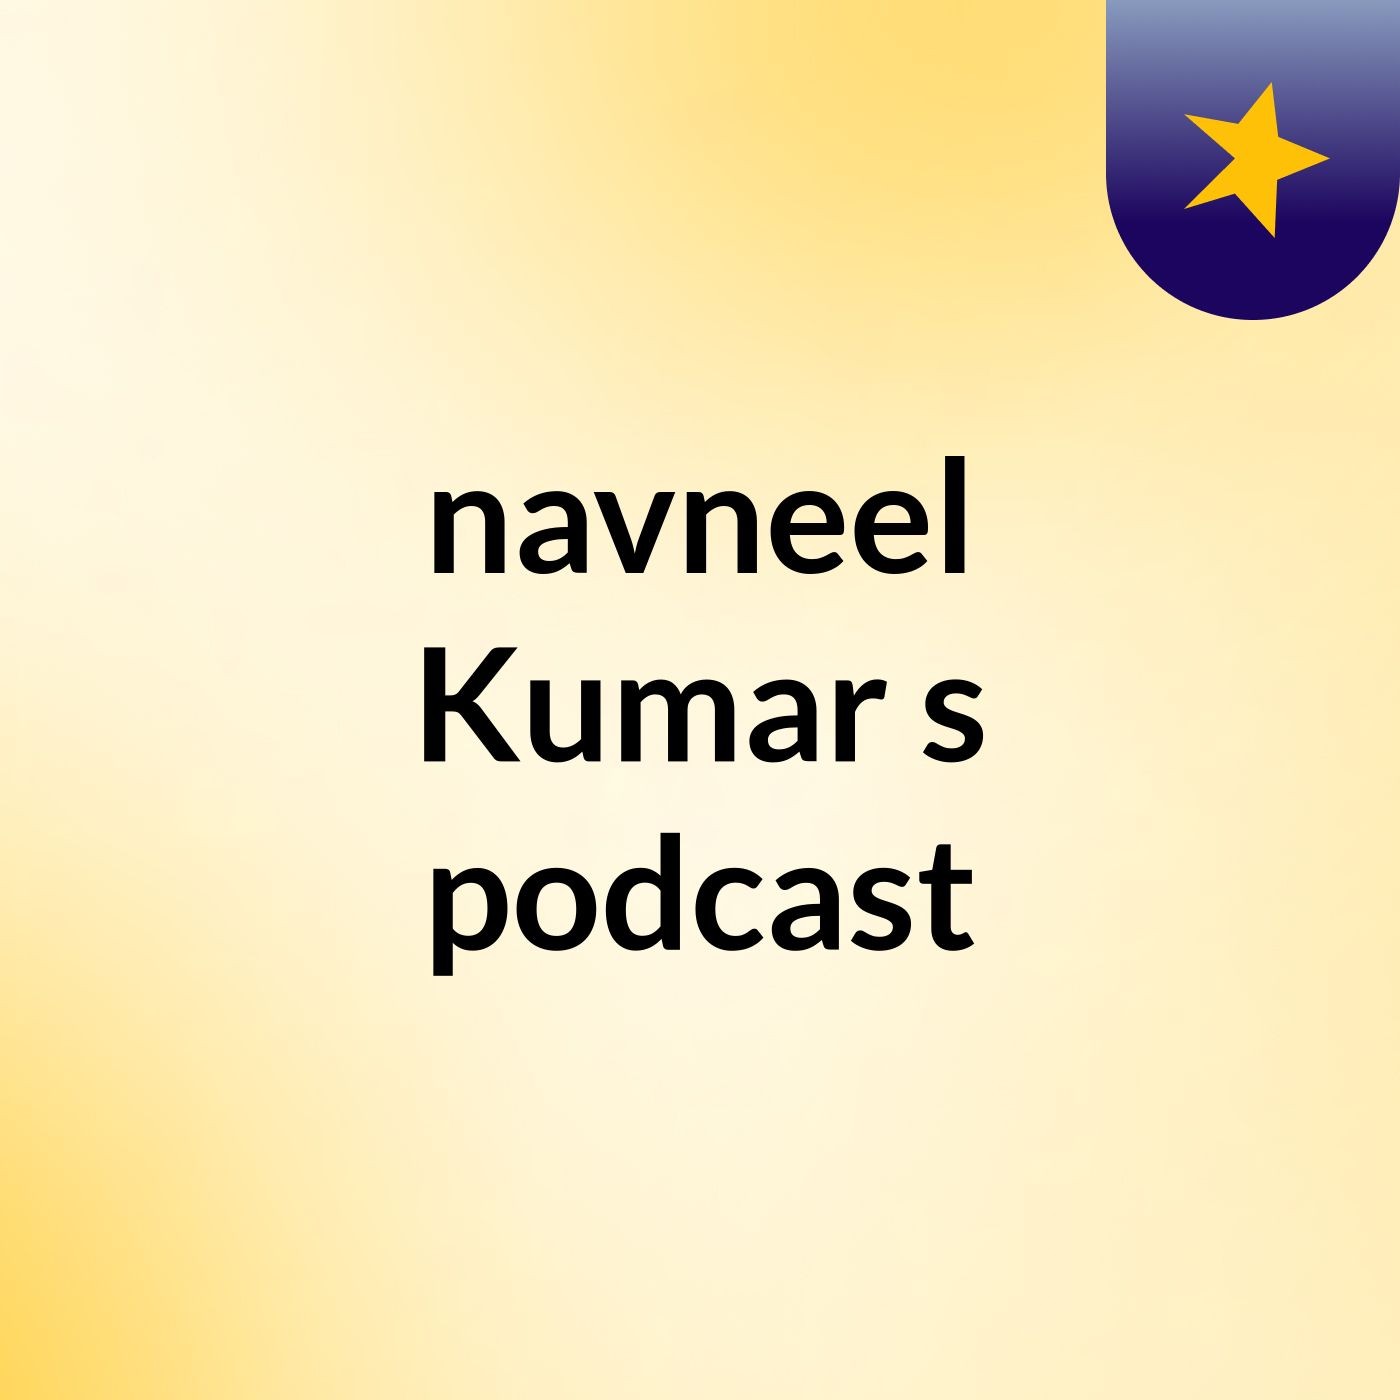 Episode 4 - navneel Kumar's podcast